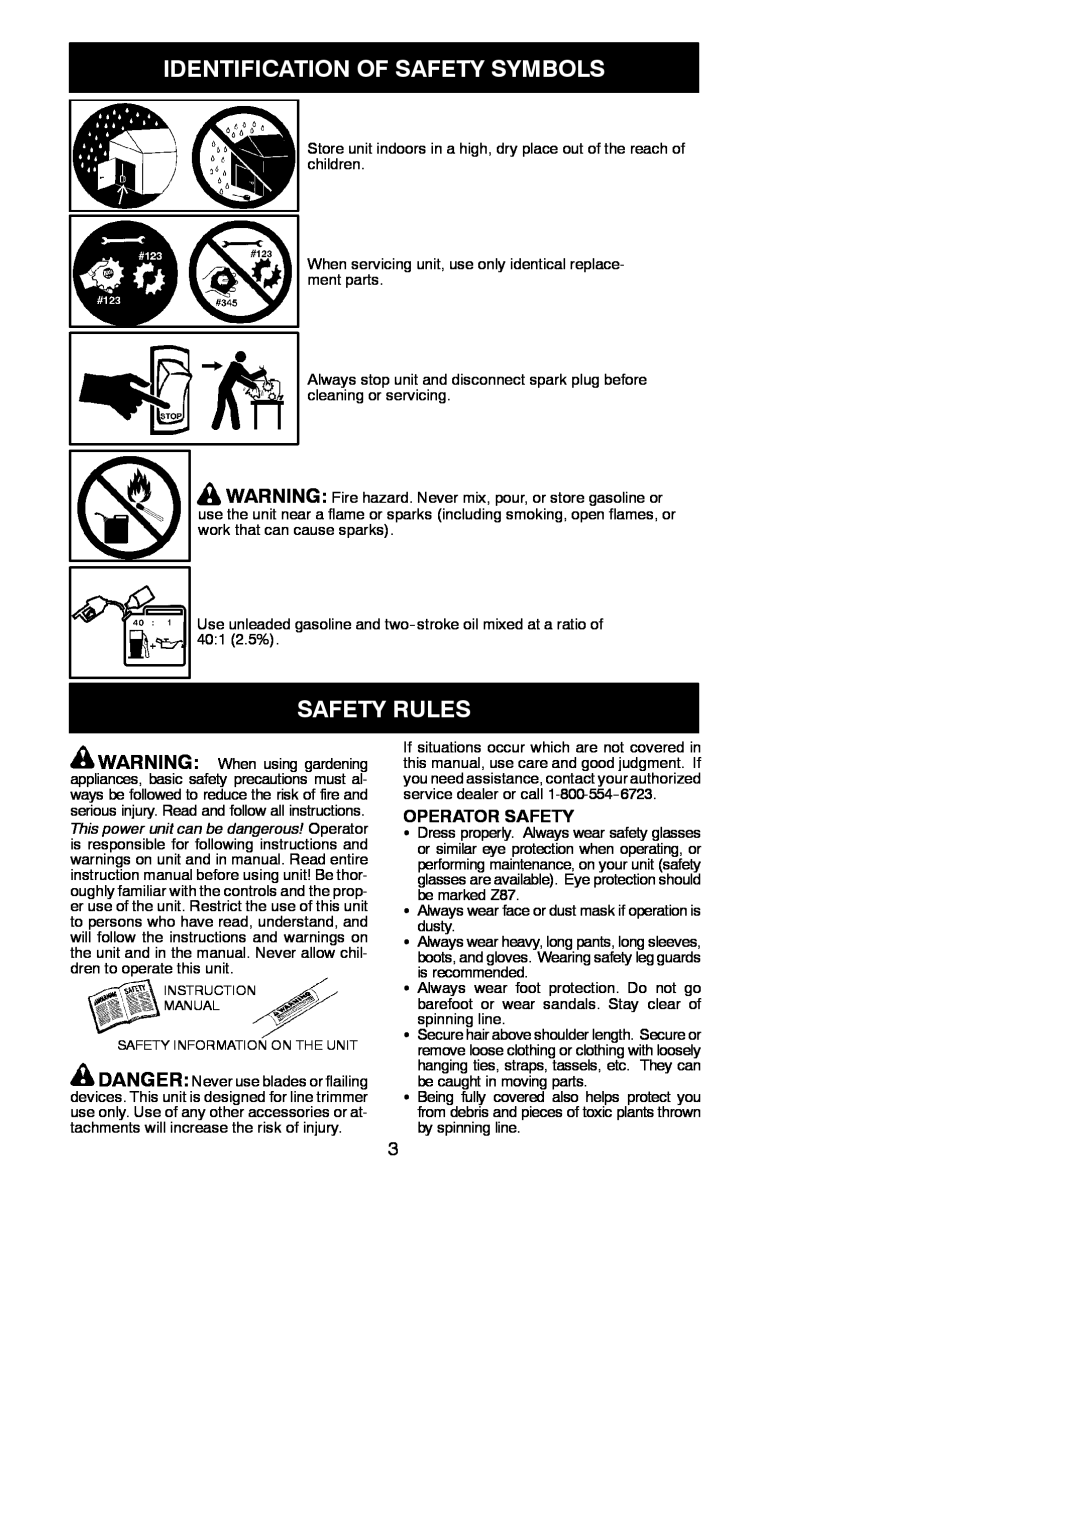 Poulan P3500, 545154718 instruction manual Safety Rules, Identification Of Safety Symbols, Operator Safety 